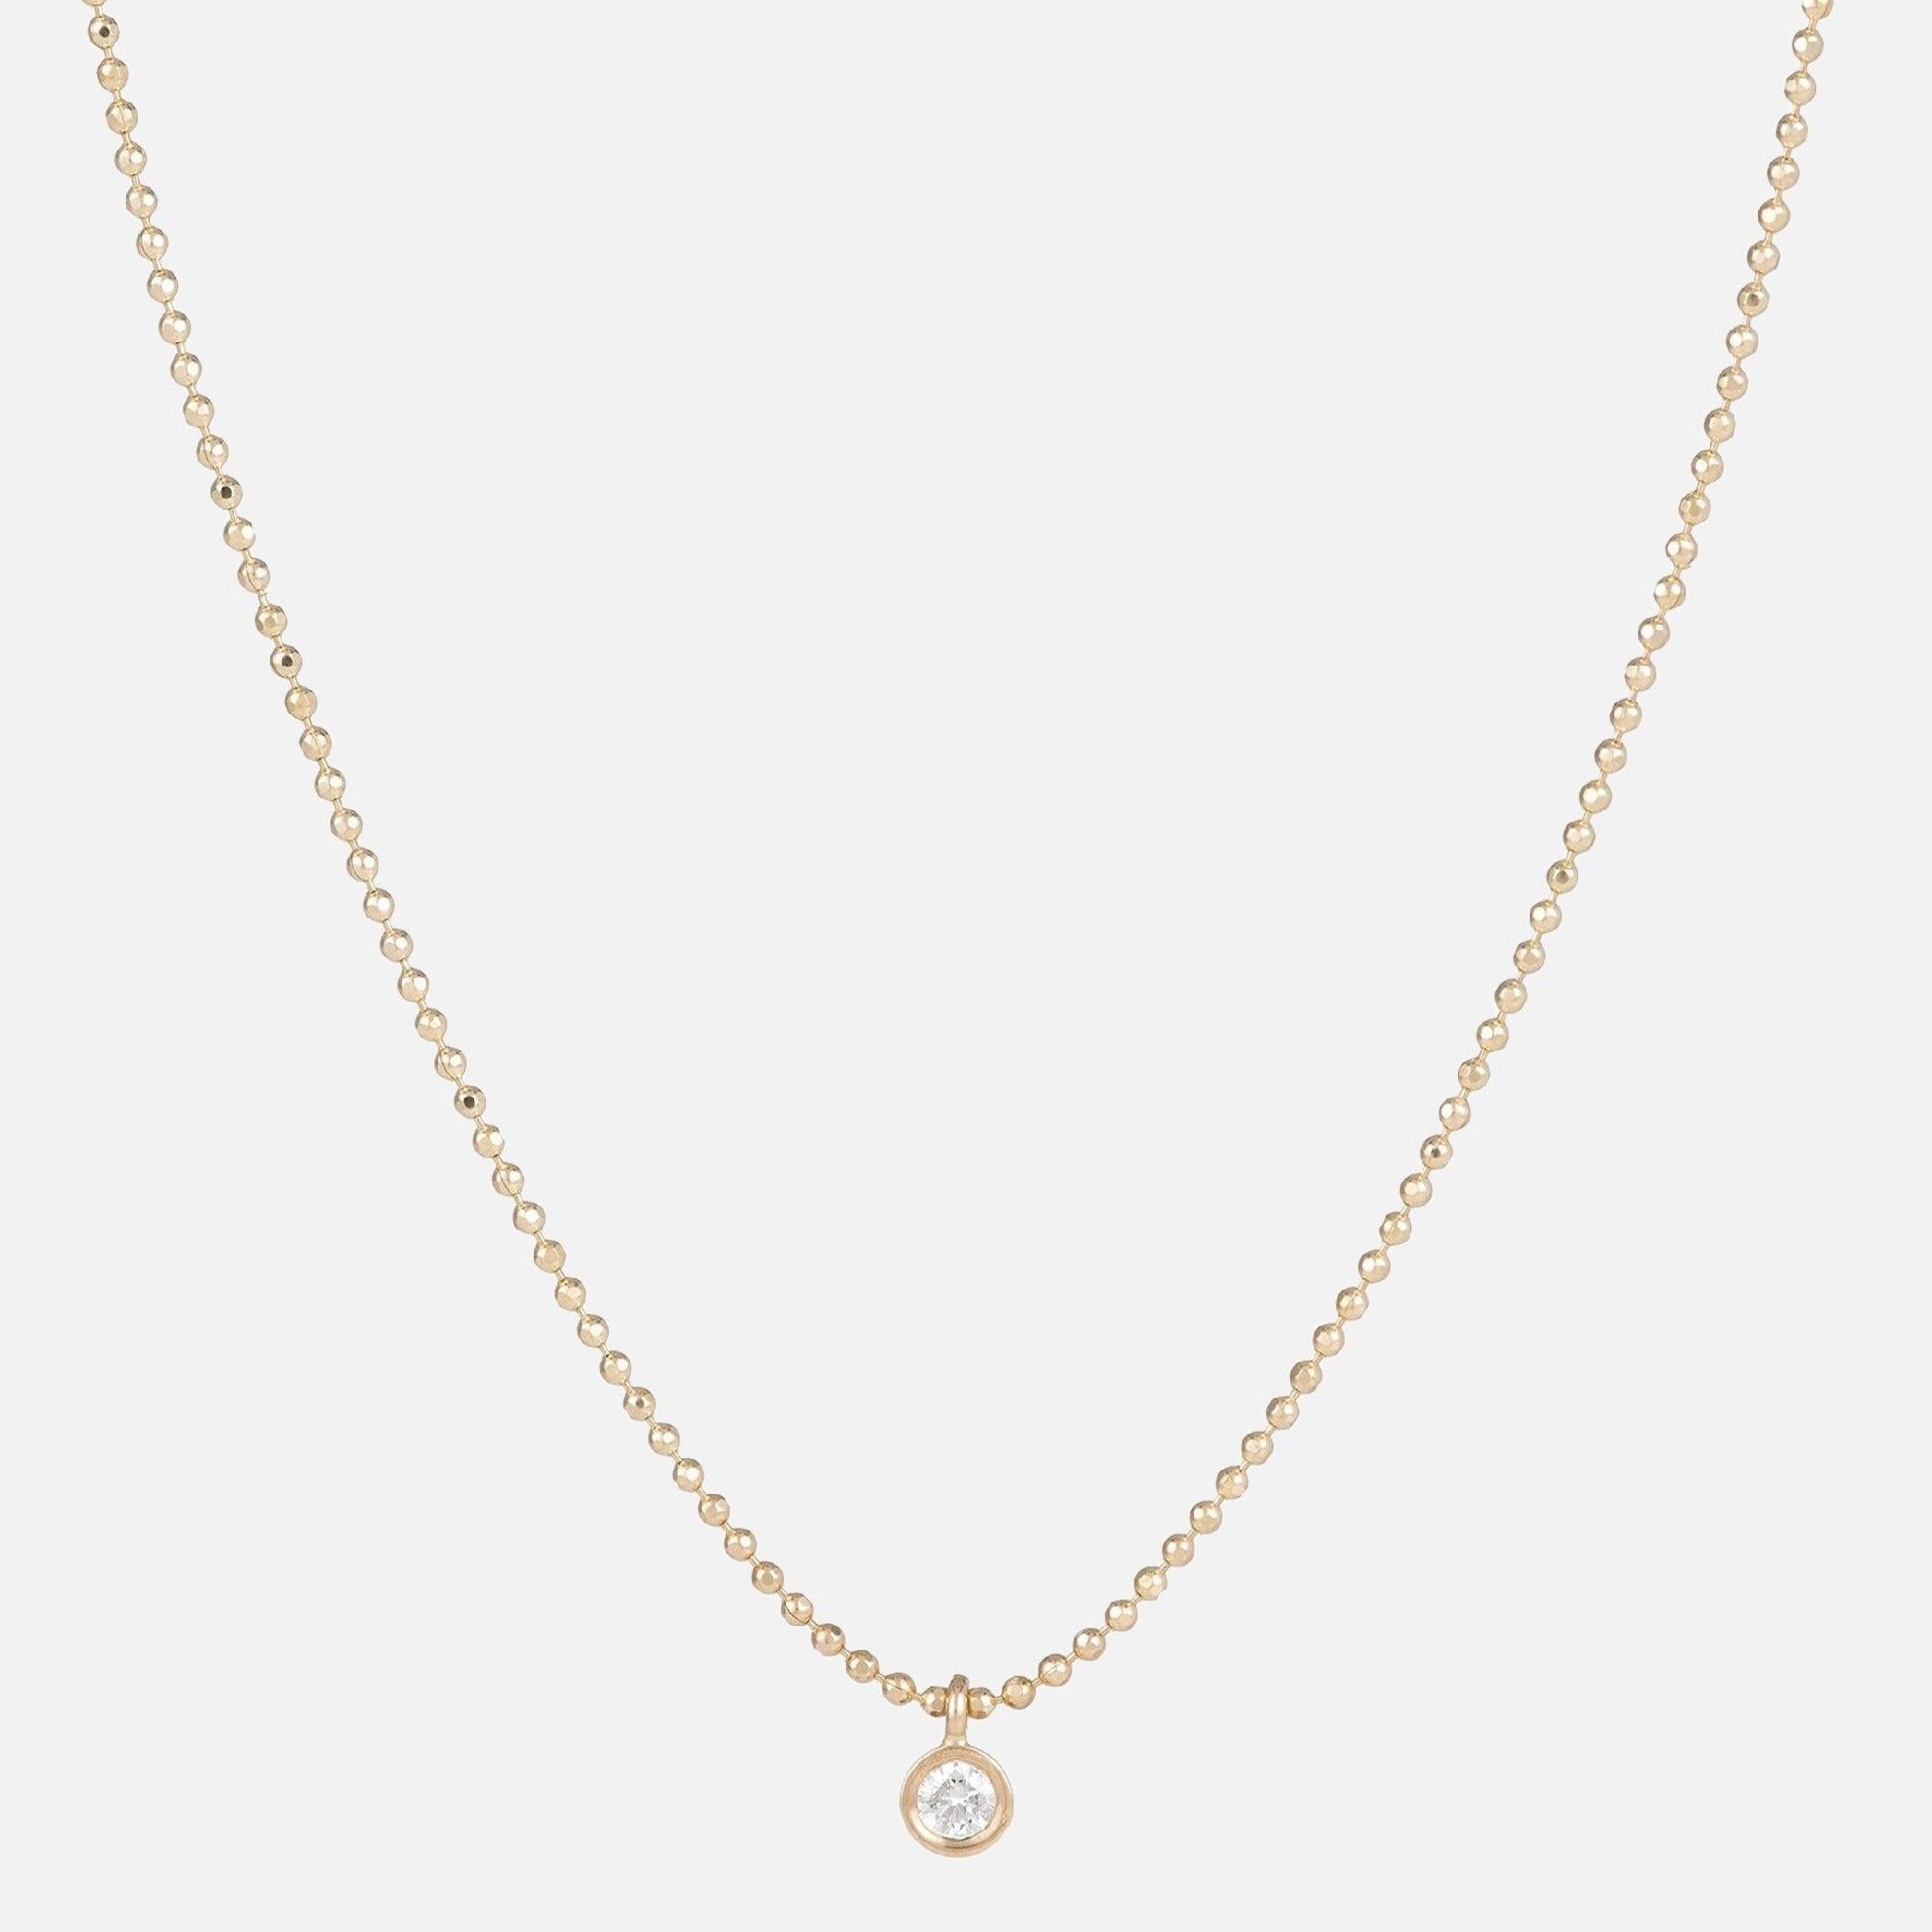 Diamond Dust Necklace - Ariel Gordon Jewelry - At Present